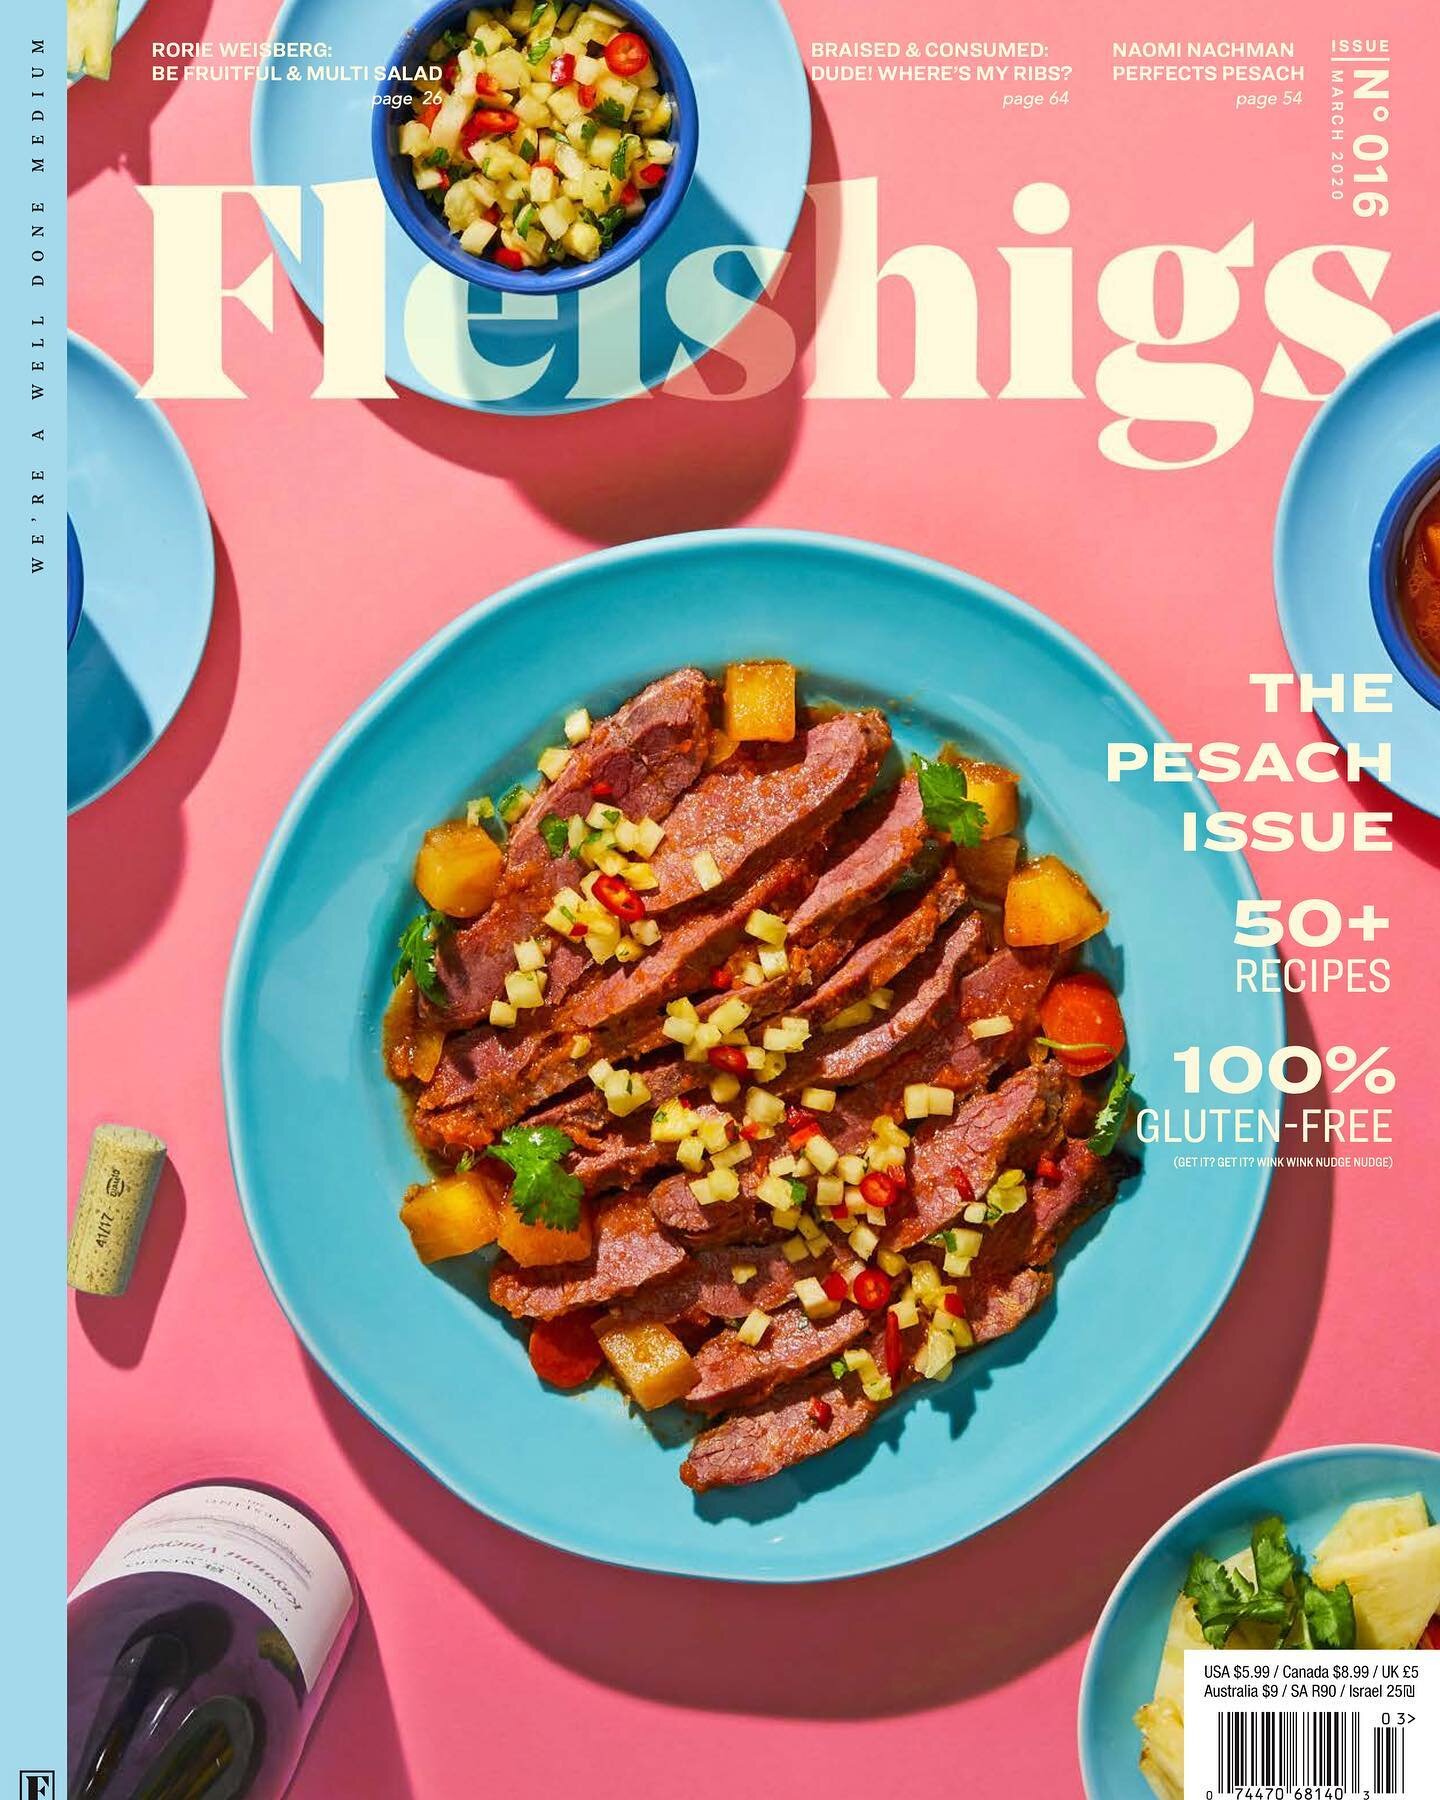 Let&rsquo;s have the roast 🥩
-
-
Cover shot for @fleishigsmag Issue 016
Editor in Chief/Stylist: @shifraklein
Editorial Design: @mannsalesco
-
-
#fleishigs #fleishigsmag #food #foodie #foodphotography #foodmagazine #tearsheet #eeeeeats #foodbloggerp